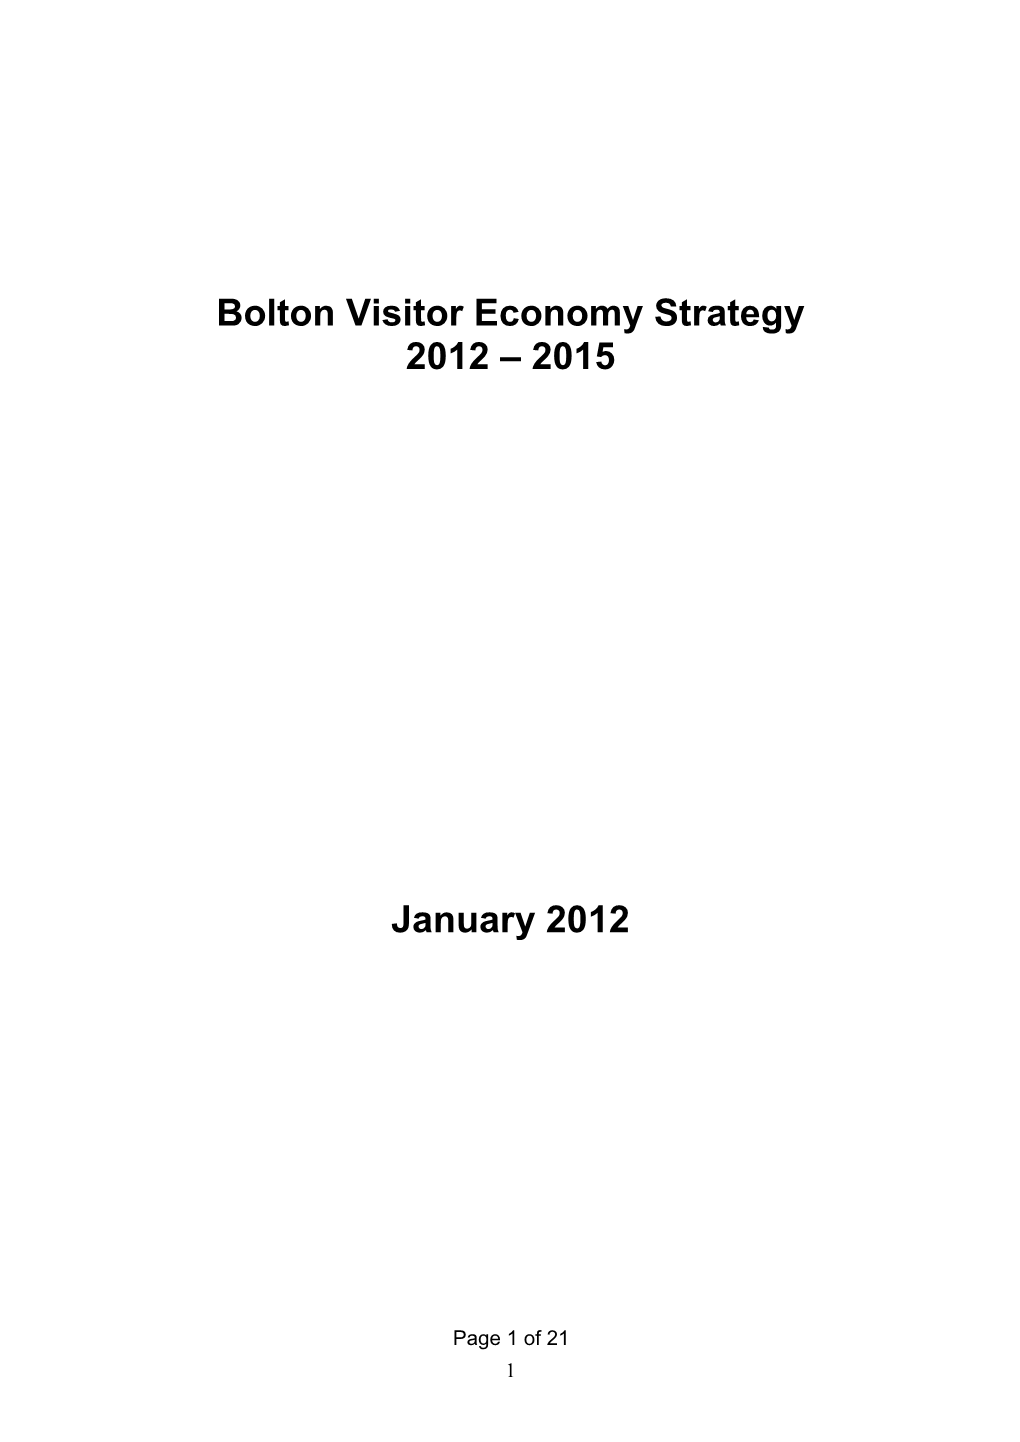 Tourism Strategy Workshop Notes